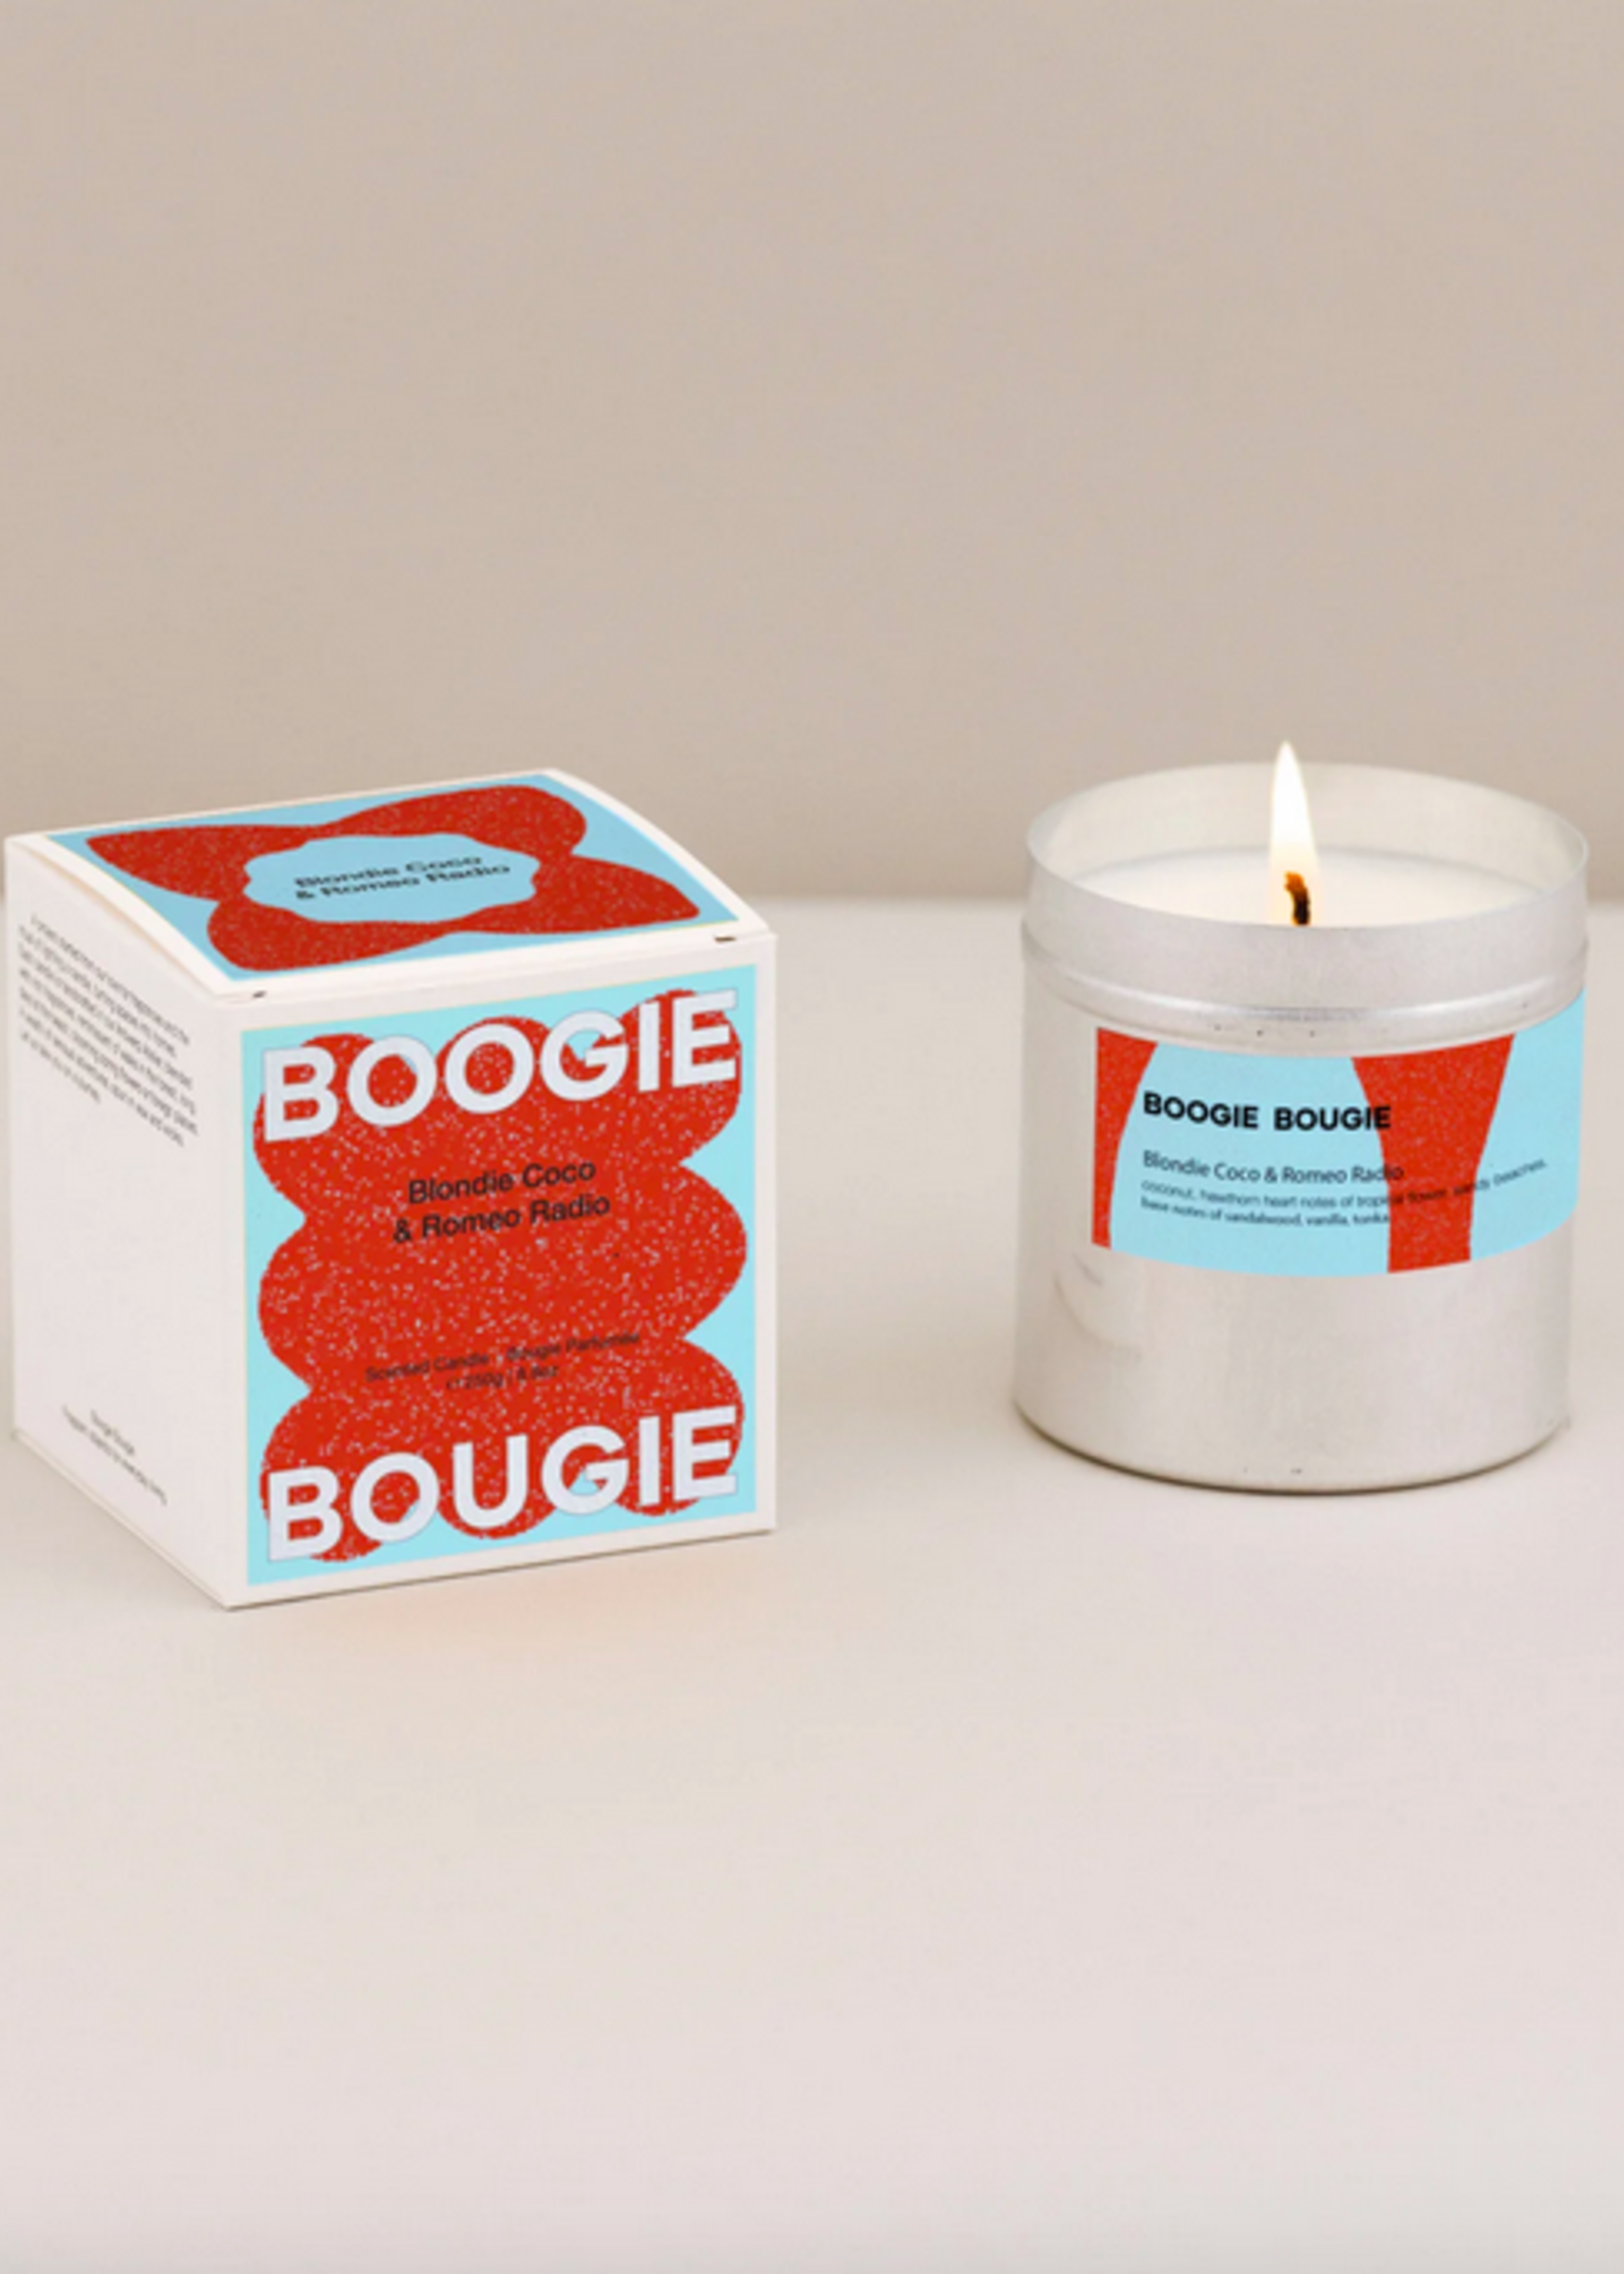 boogie bougie Boogie Bougie - Blondie Coco & Romeo Radio